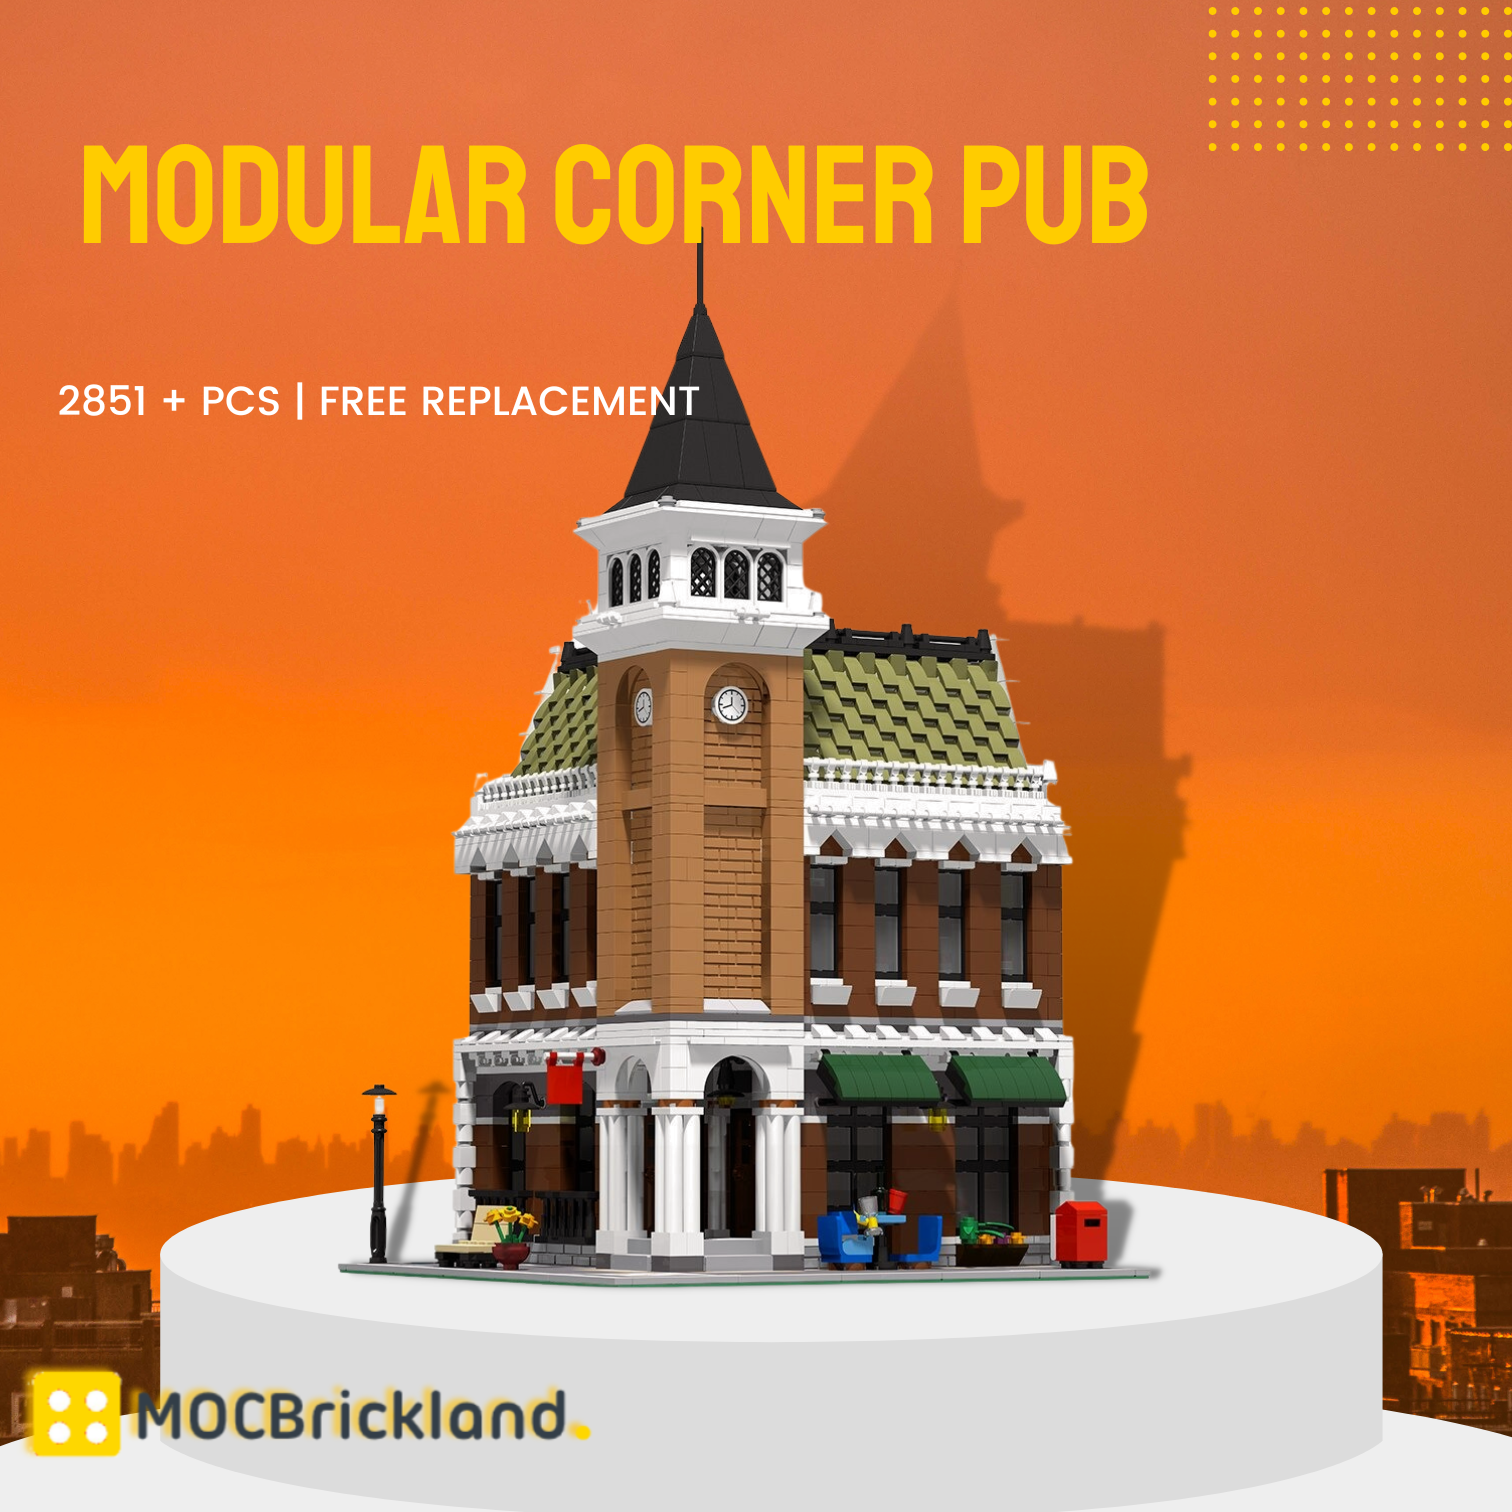 MOCBRICKLAND MOC-118705 Modular Corner Pub